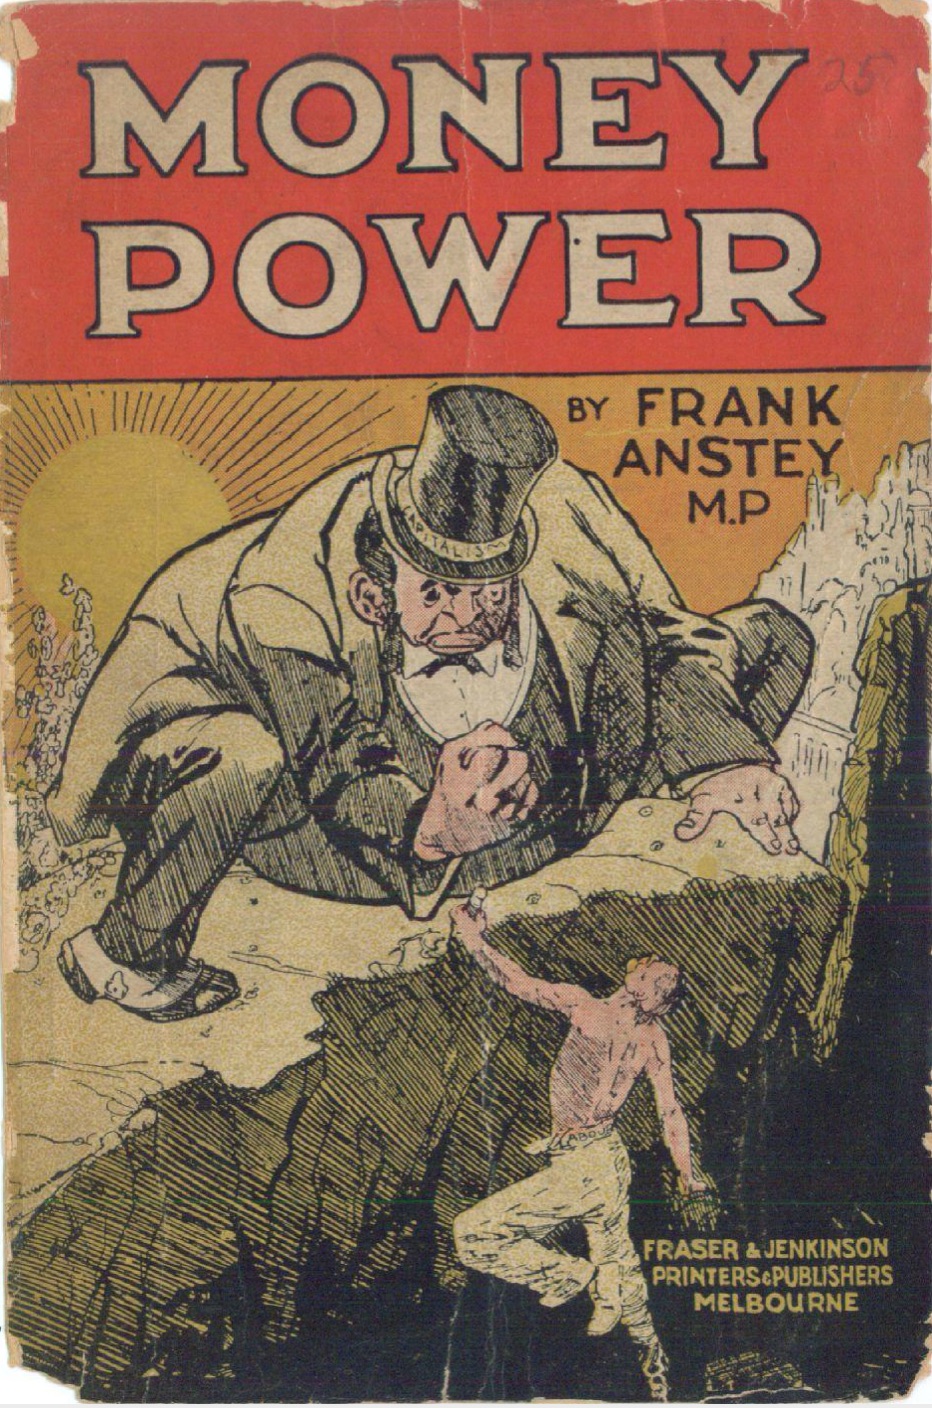 Money Power (1921) by Frank Anstey